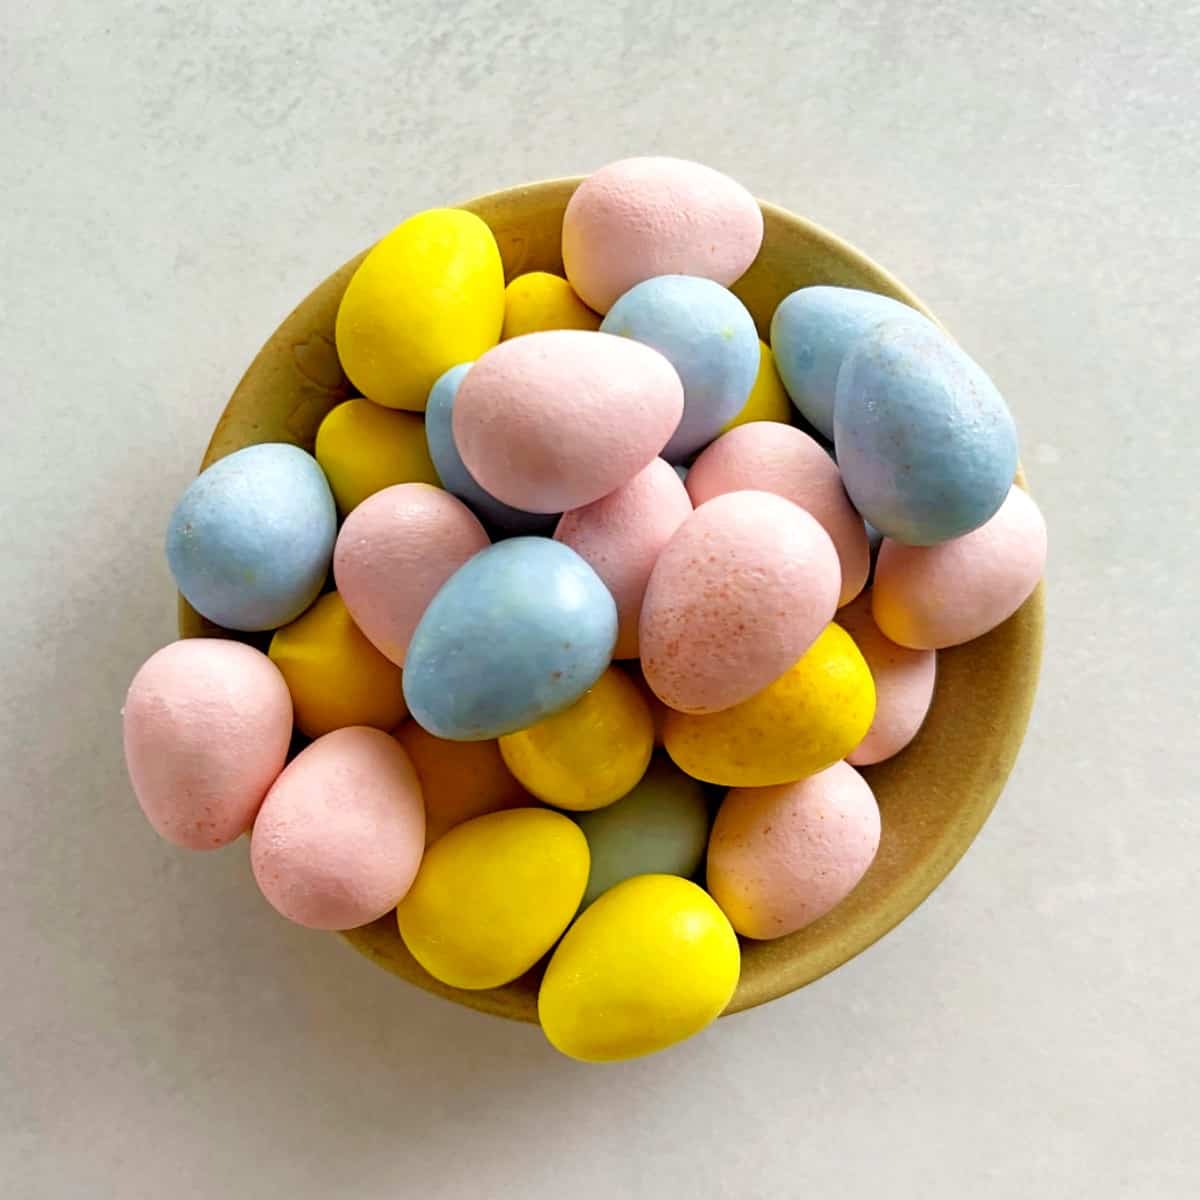 cadbury mini eggs in a bowl.